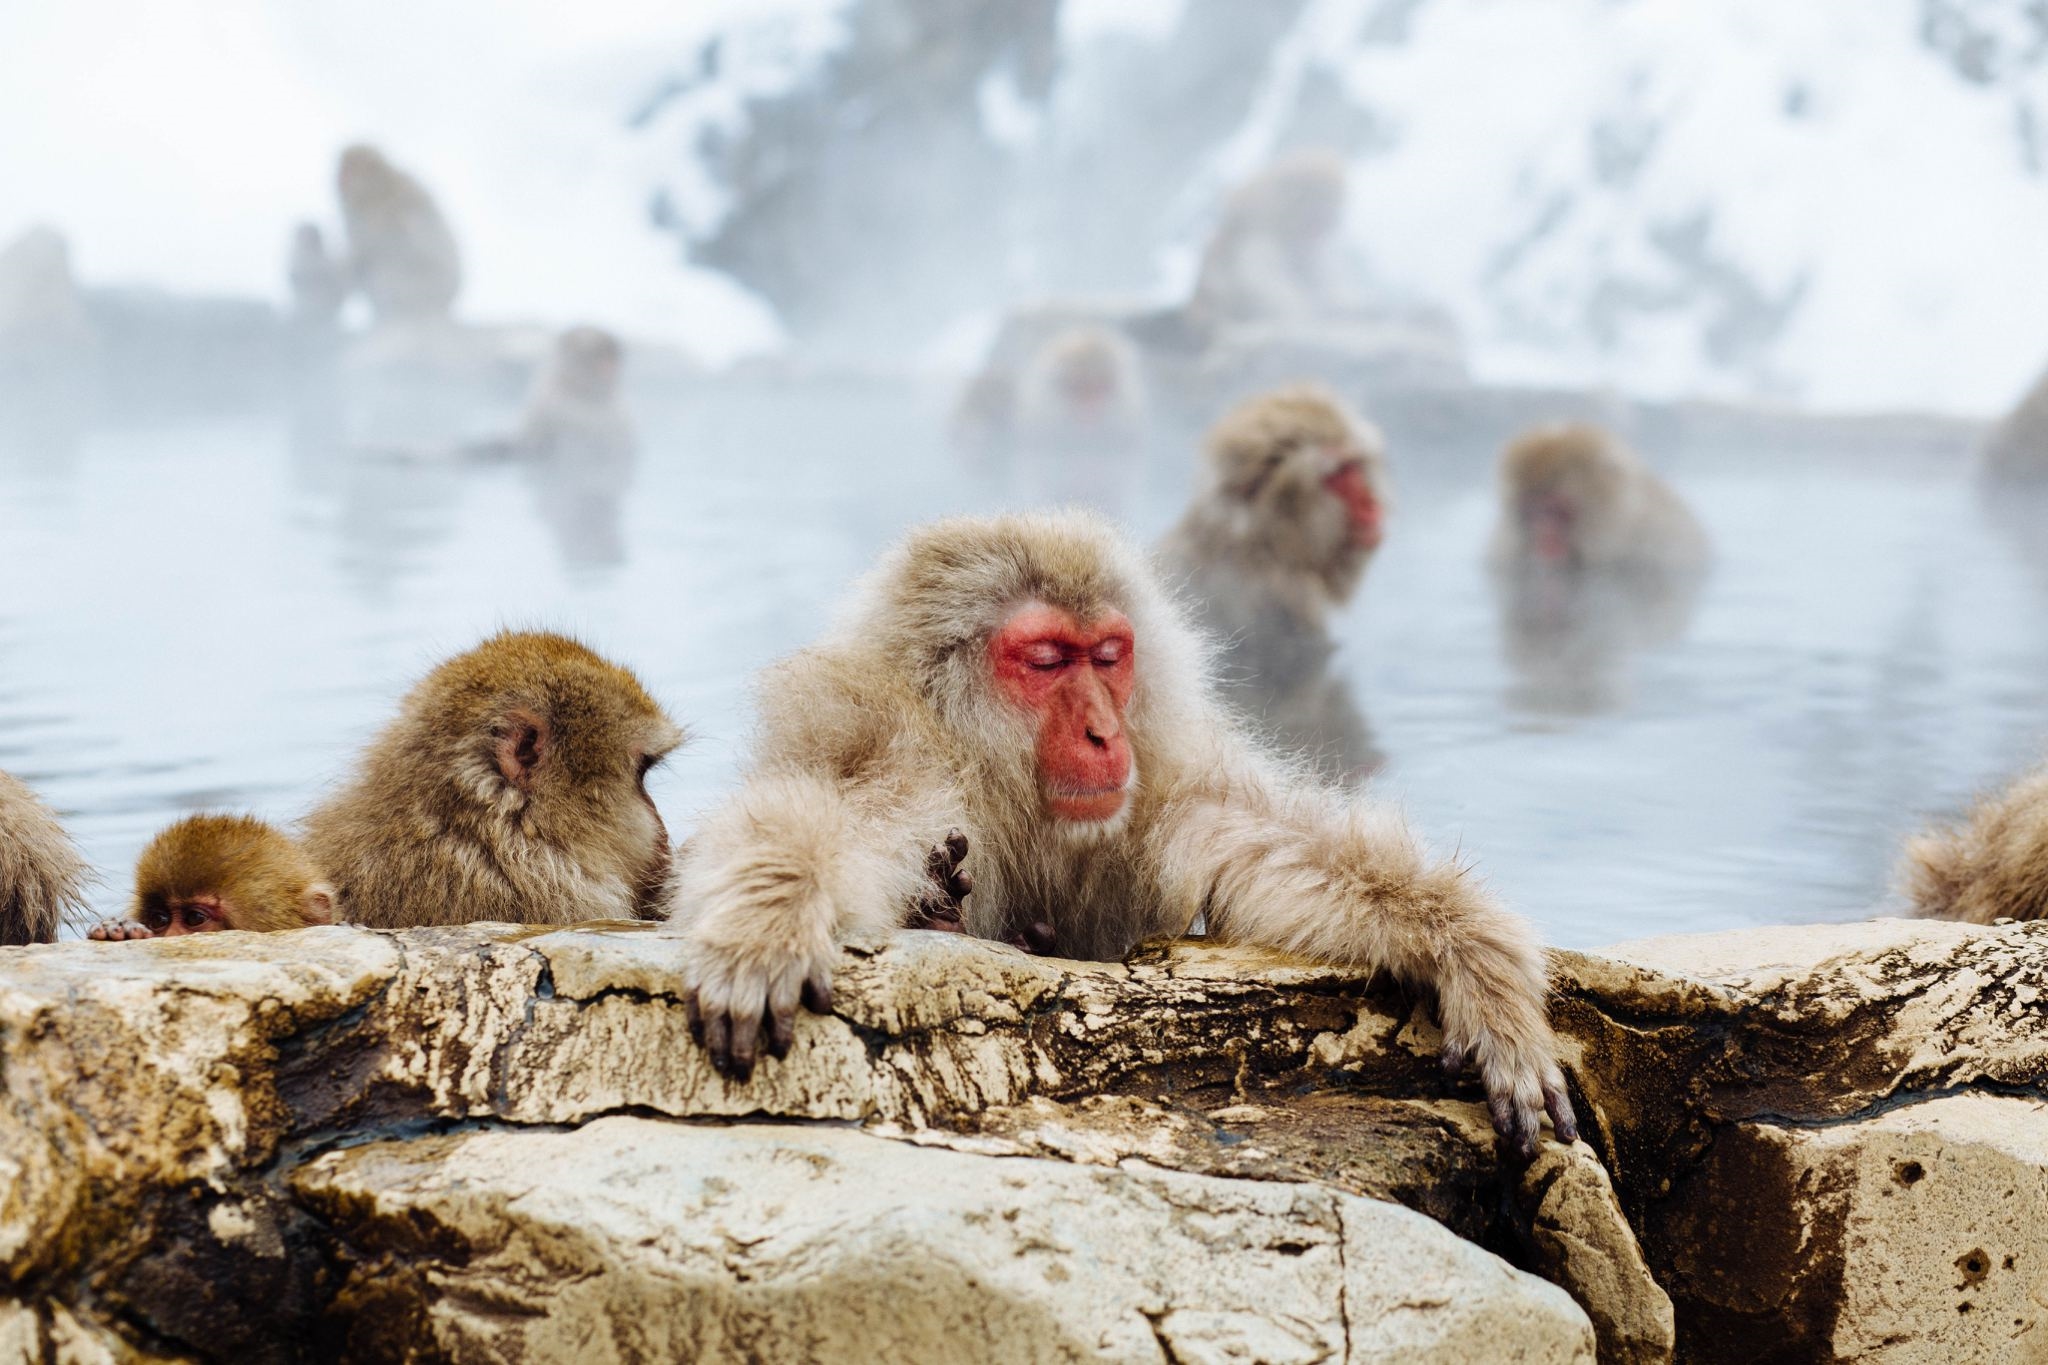 Explore Yamanouchi - Home of the Snow Monkeys